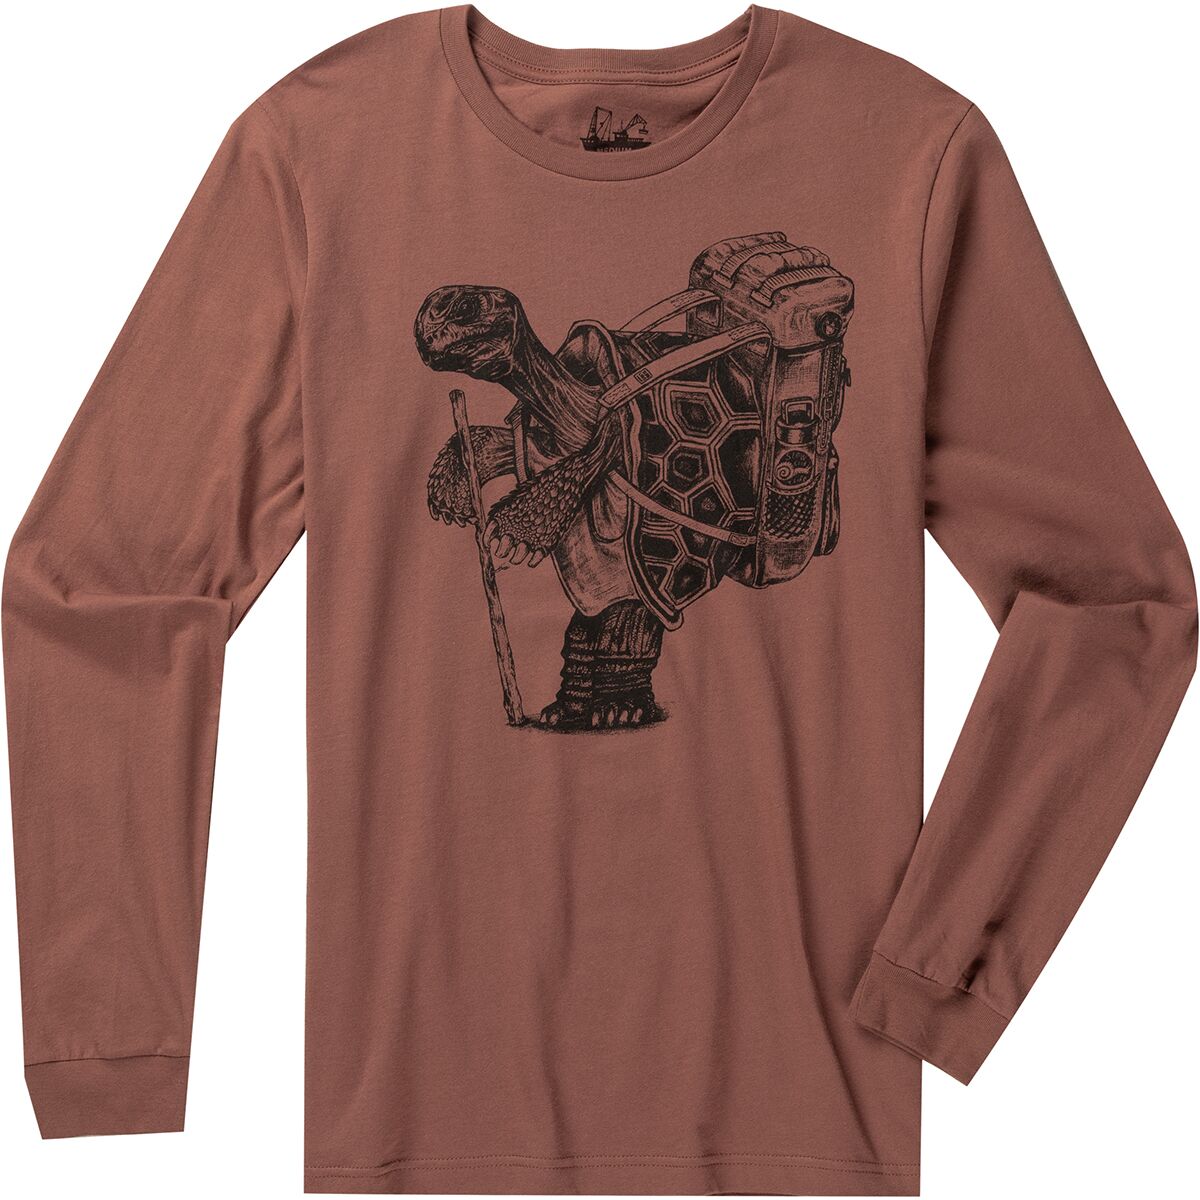 Hiking Tortoise Long-Sleeve T-Shirt - Men